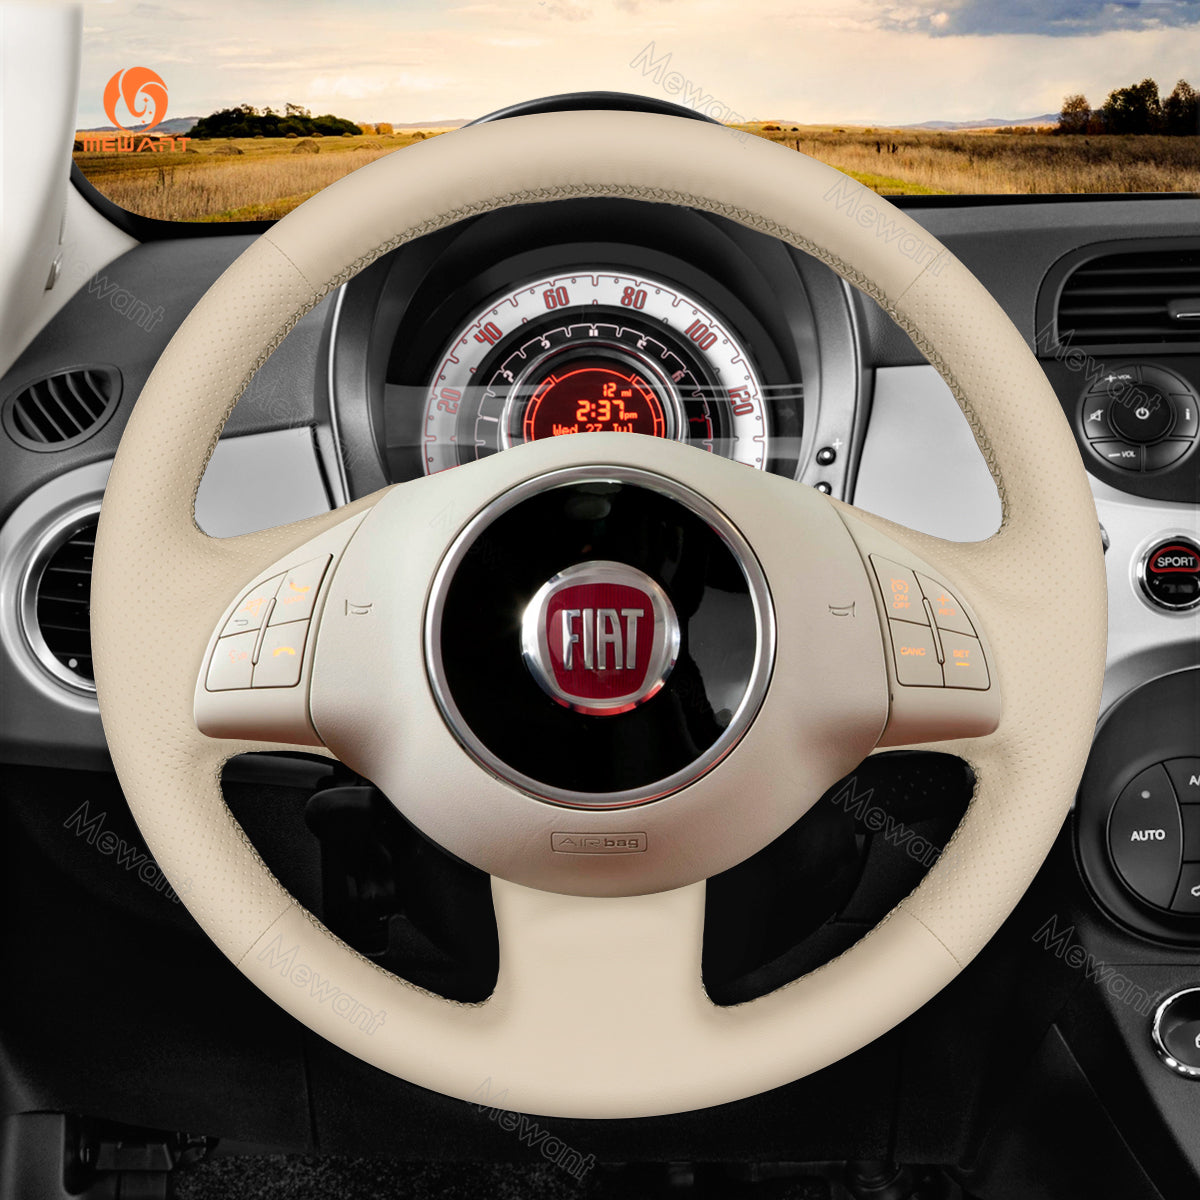 Car steering wheel cover for Fiat 500 2007-2015 / Fiat 500e 2014-2018 / Fiat 500C